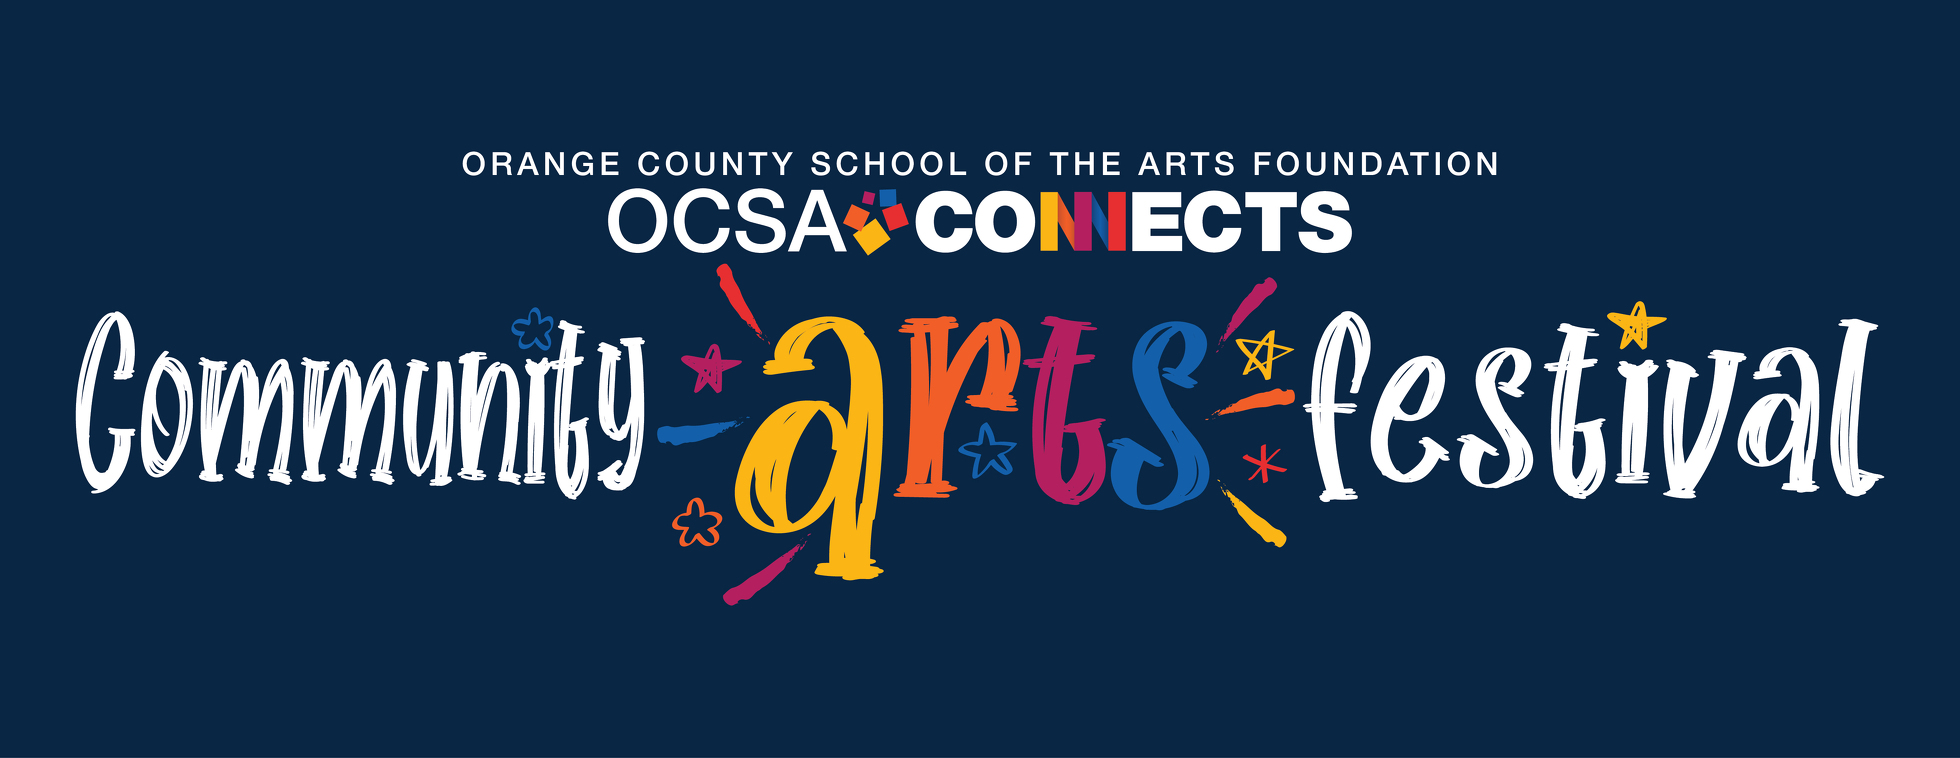 OCSA Connects Community Arts Festival Registration